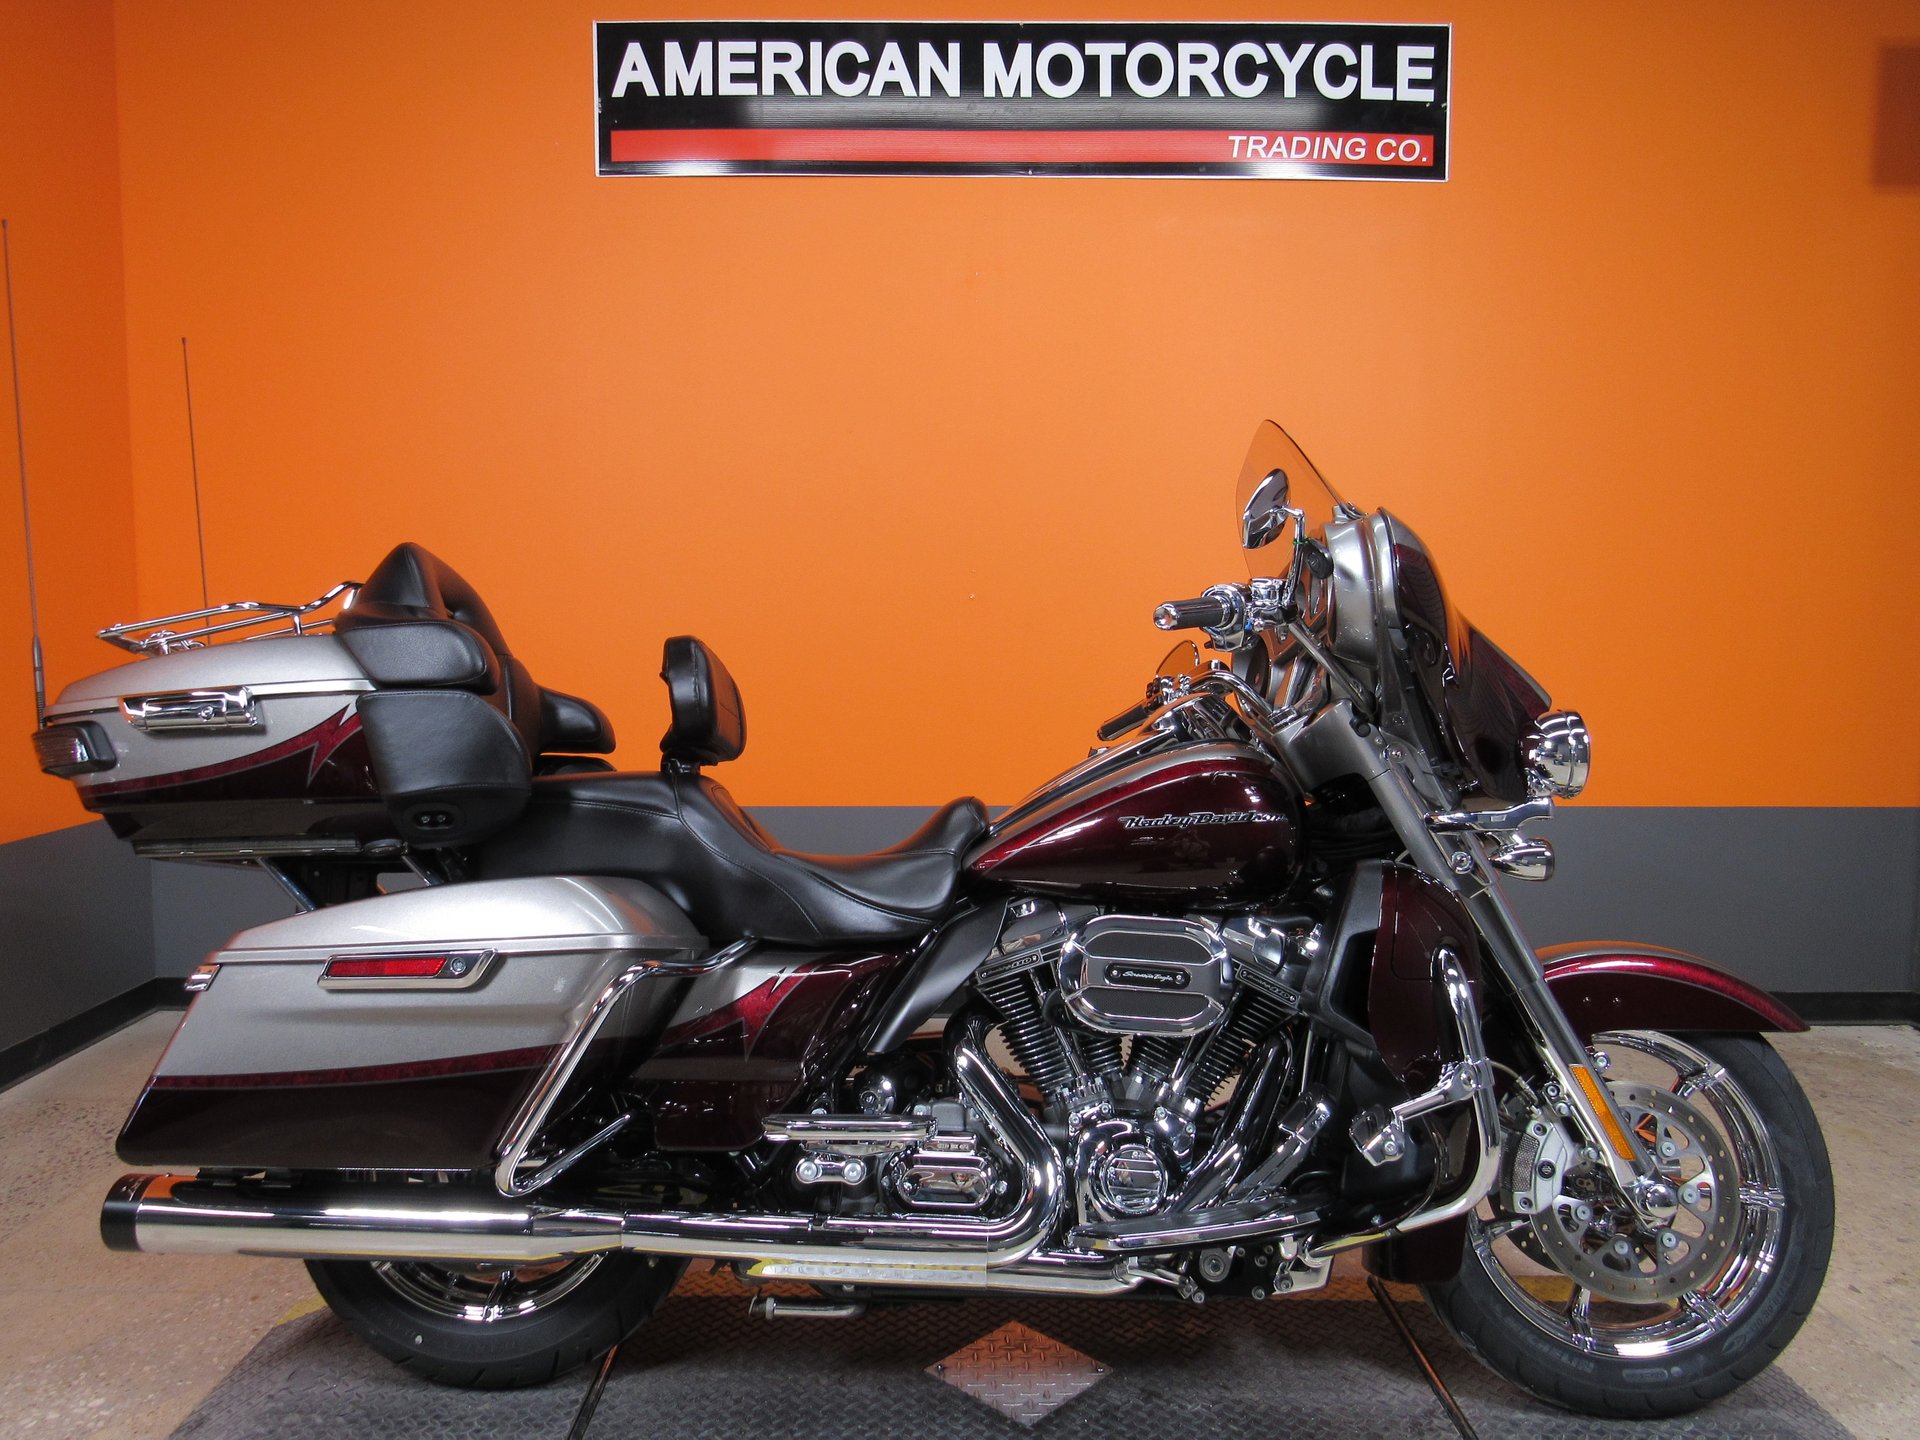 2015 Harley Davidson Cvo Ultra Limited American Motorcycle Trading Company Used Harley Davidson Motorcycles